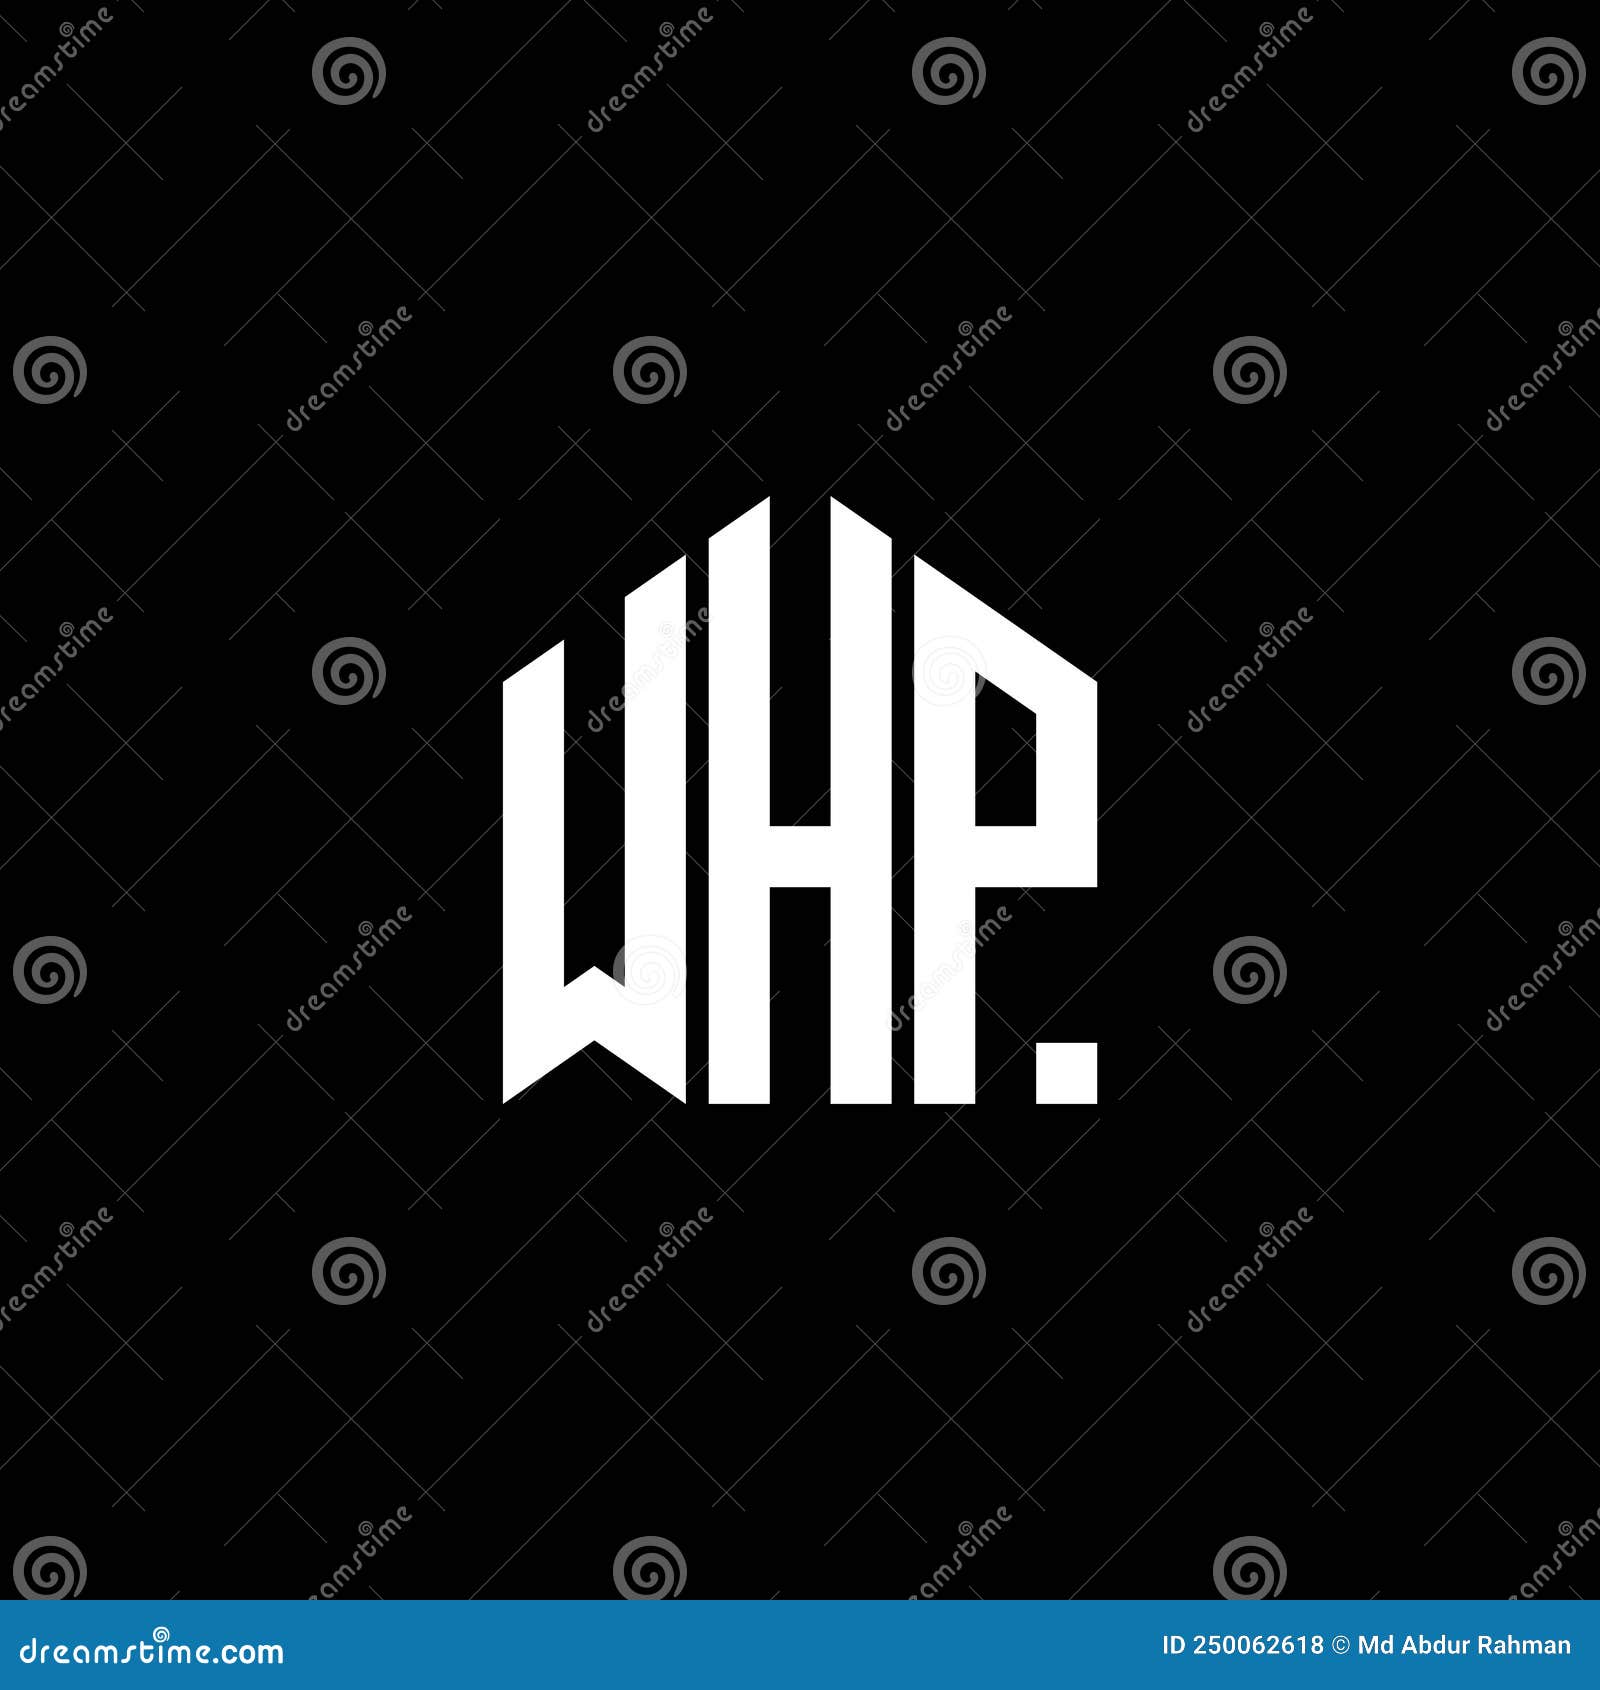 whp letter logo  on black background. whp creative initials letter logo concept. whp letter .whp letter logo  on